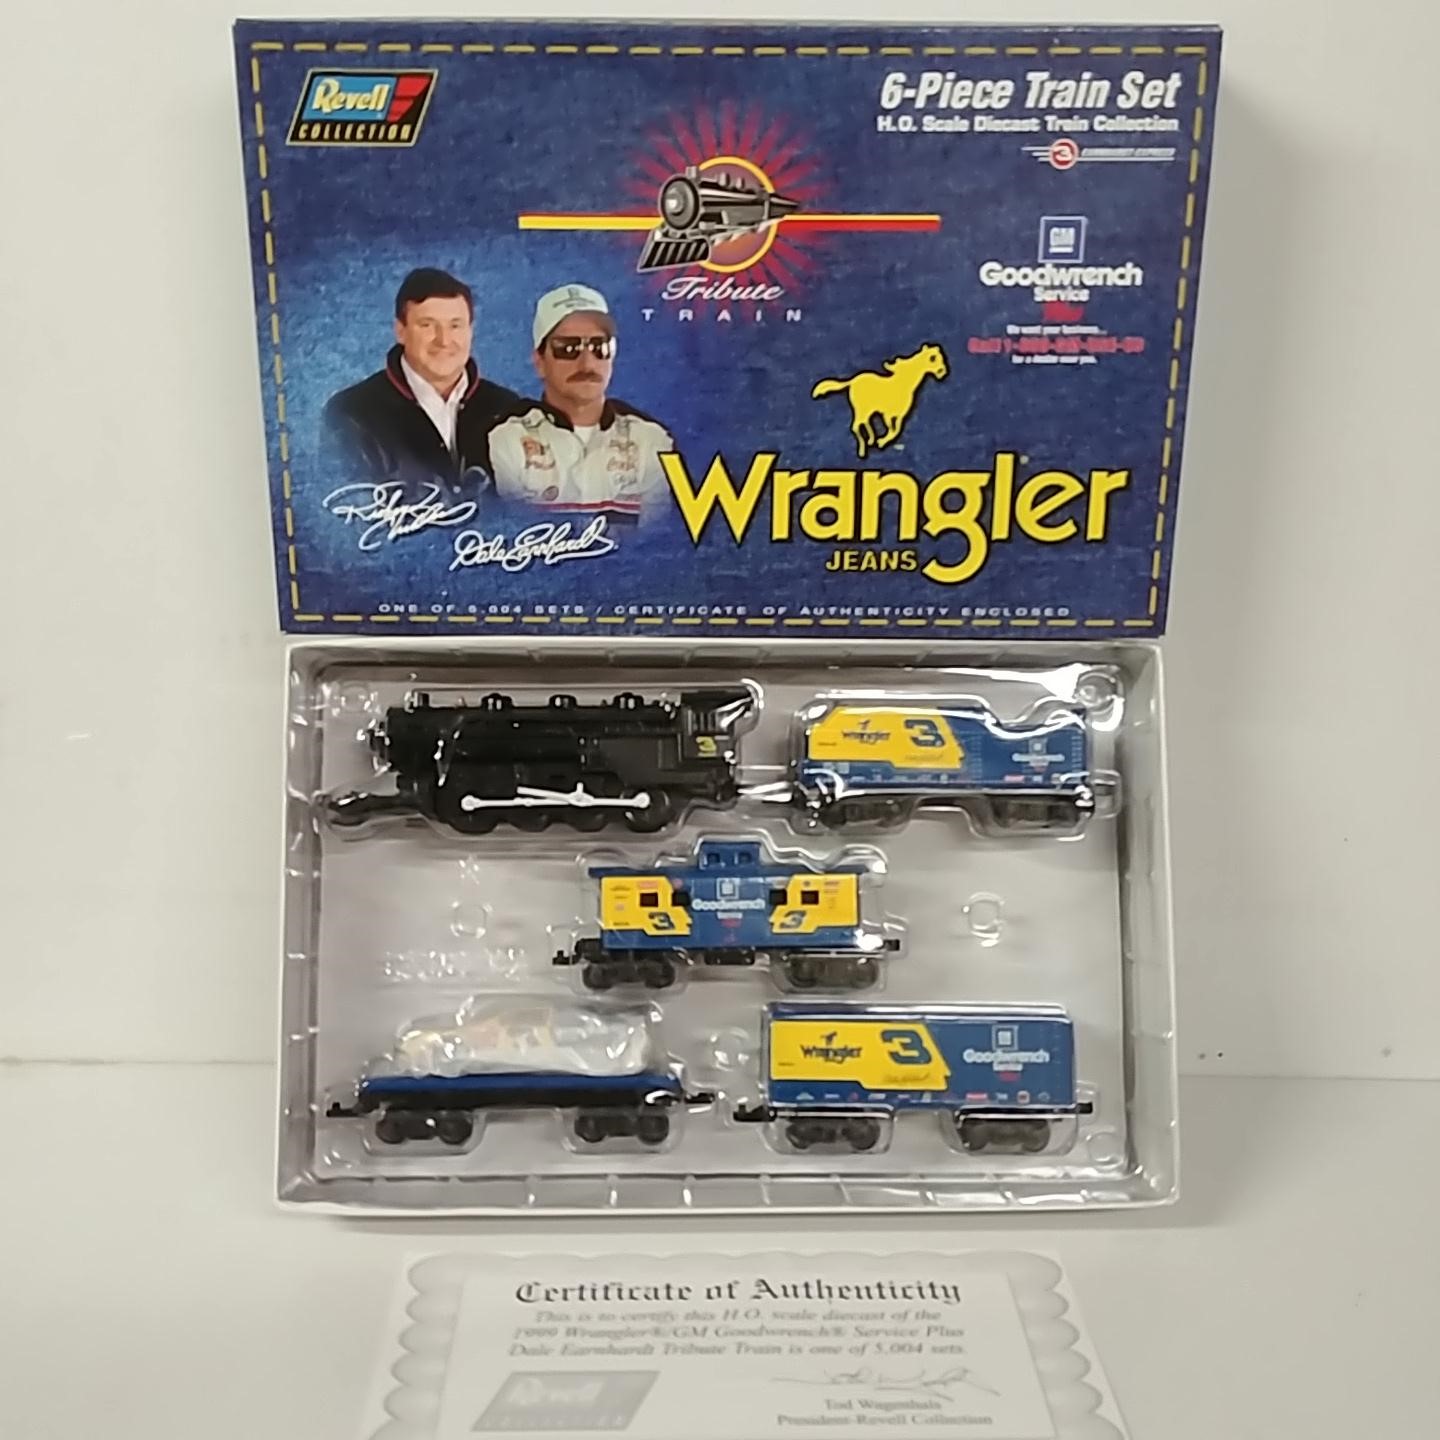 1999 Dale Earnhardt 1/64th Goodwrench "Wrangler" train set